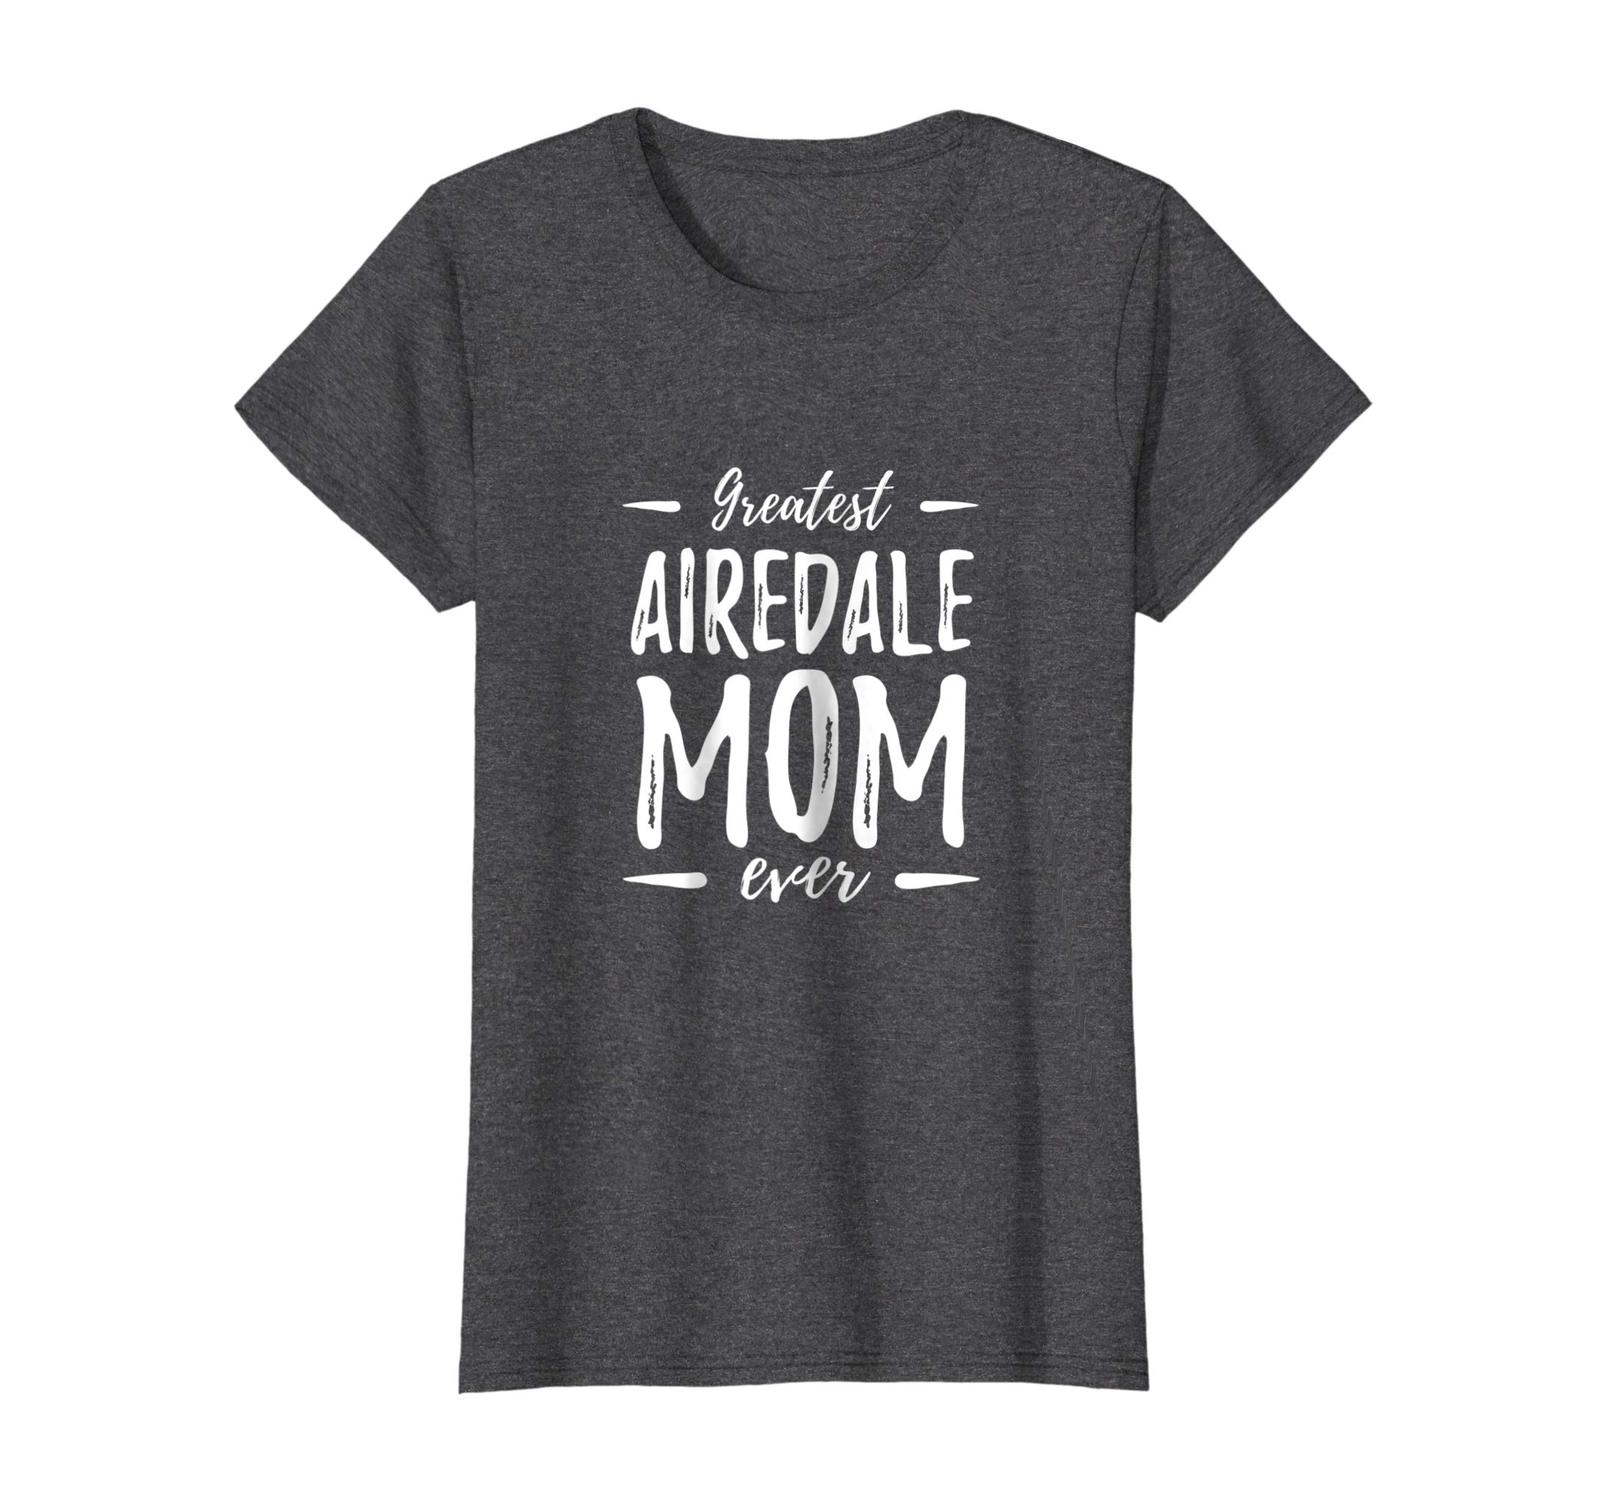 Dog Fashion - Greatest Airedale Mom Shirt Funny Dog Mom Gift Idea Wowen